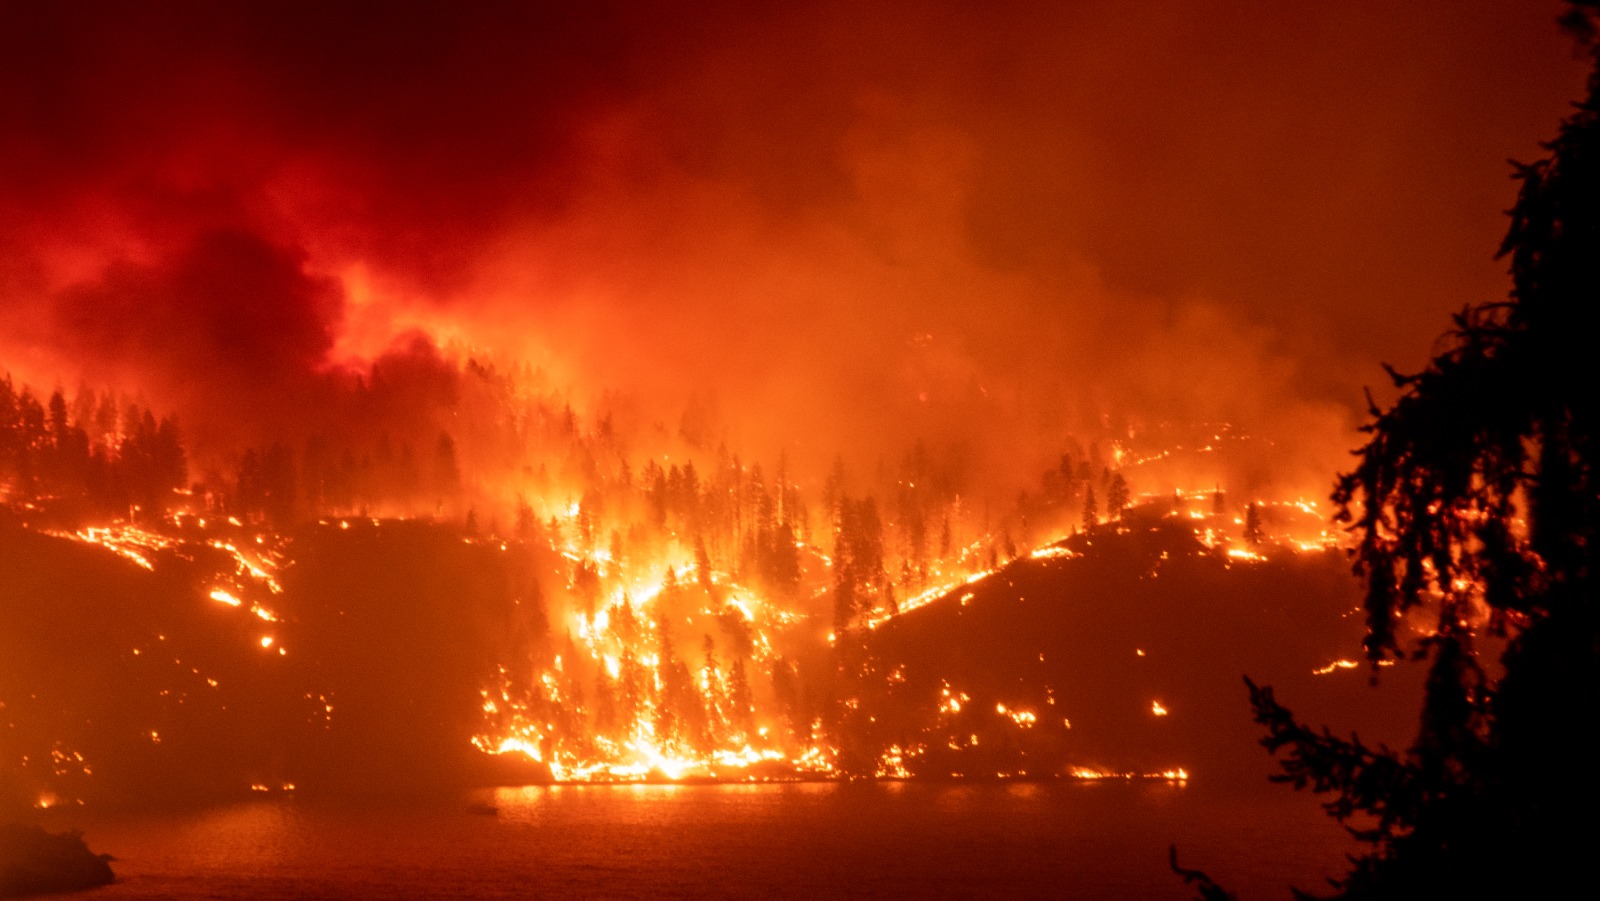 240314-wildfires-night-teaser-16x9-1600px.jpg